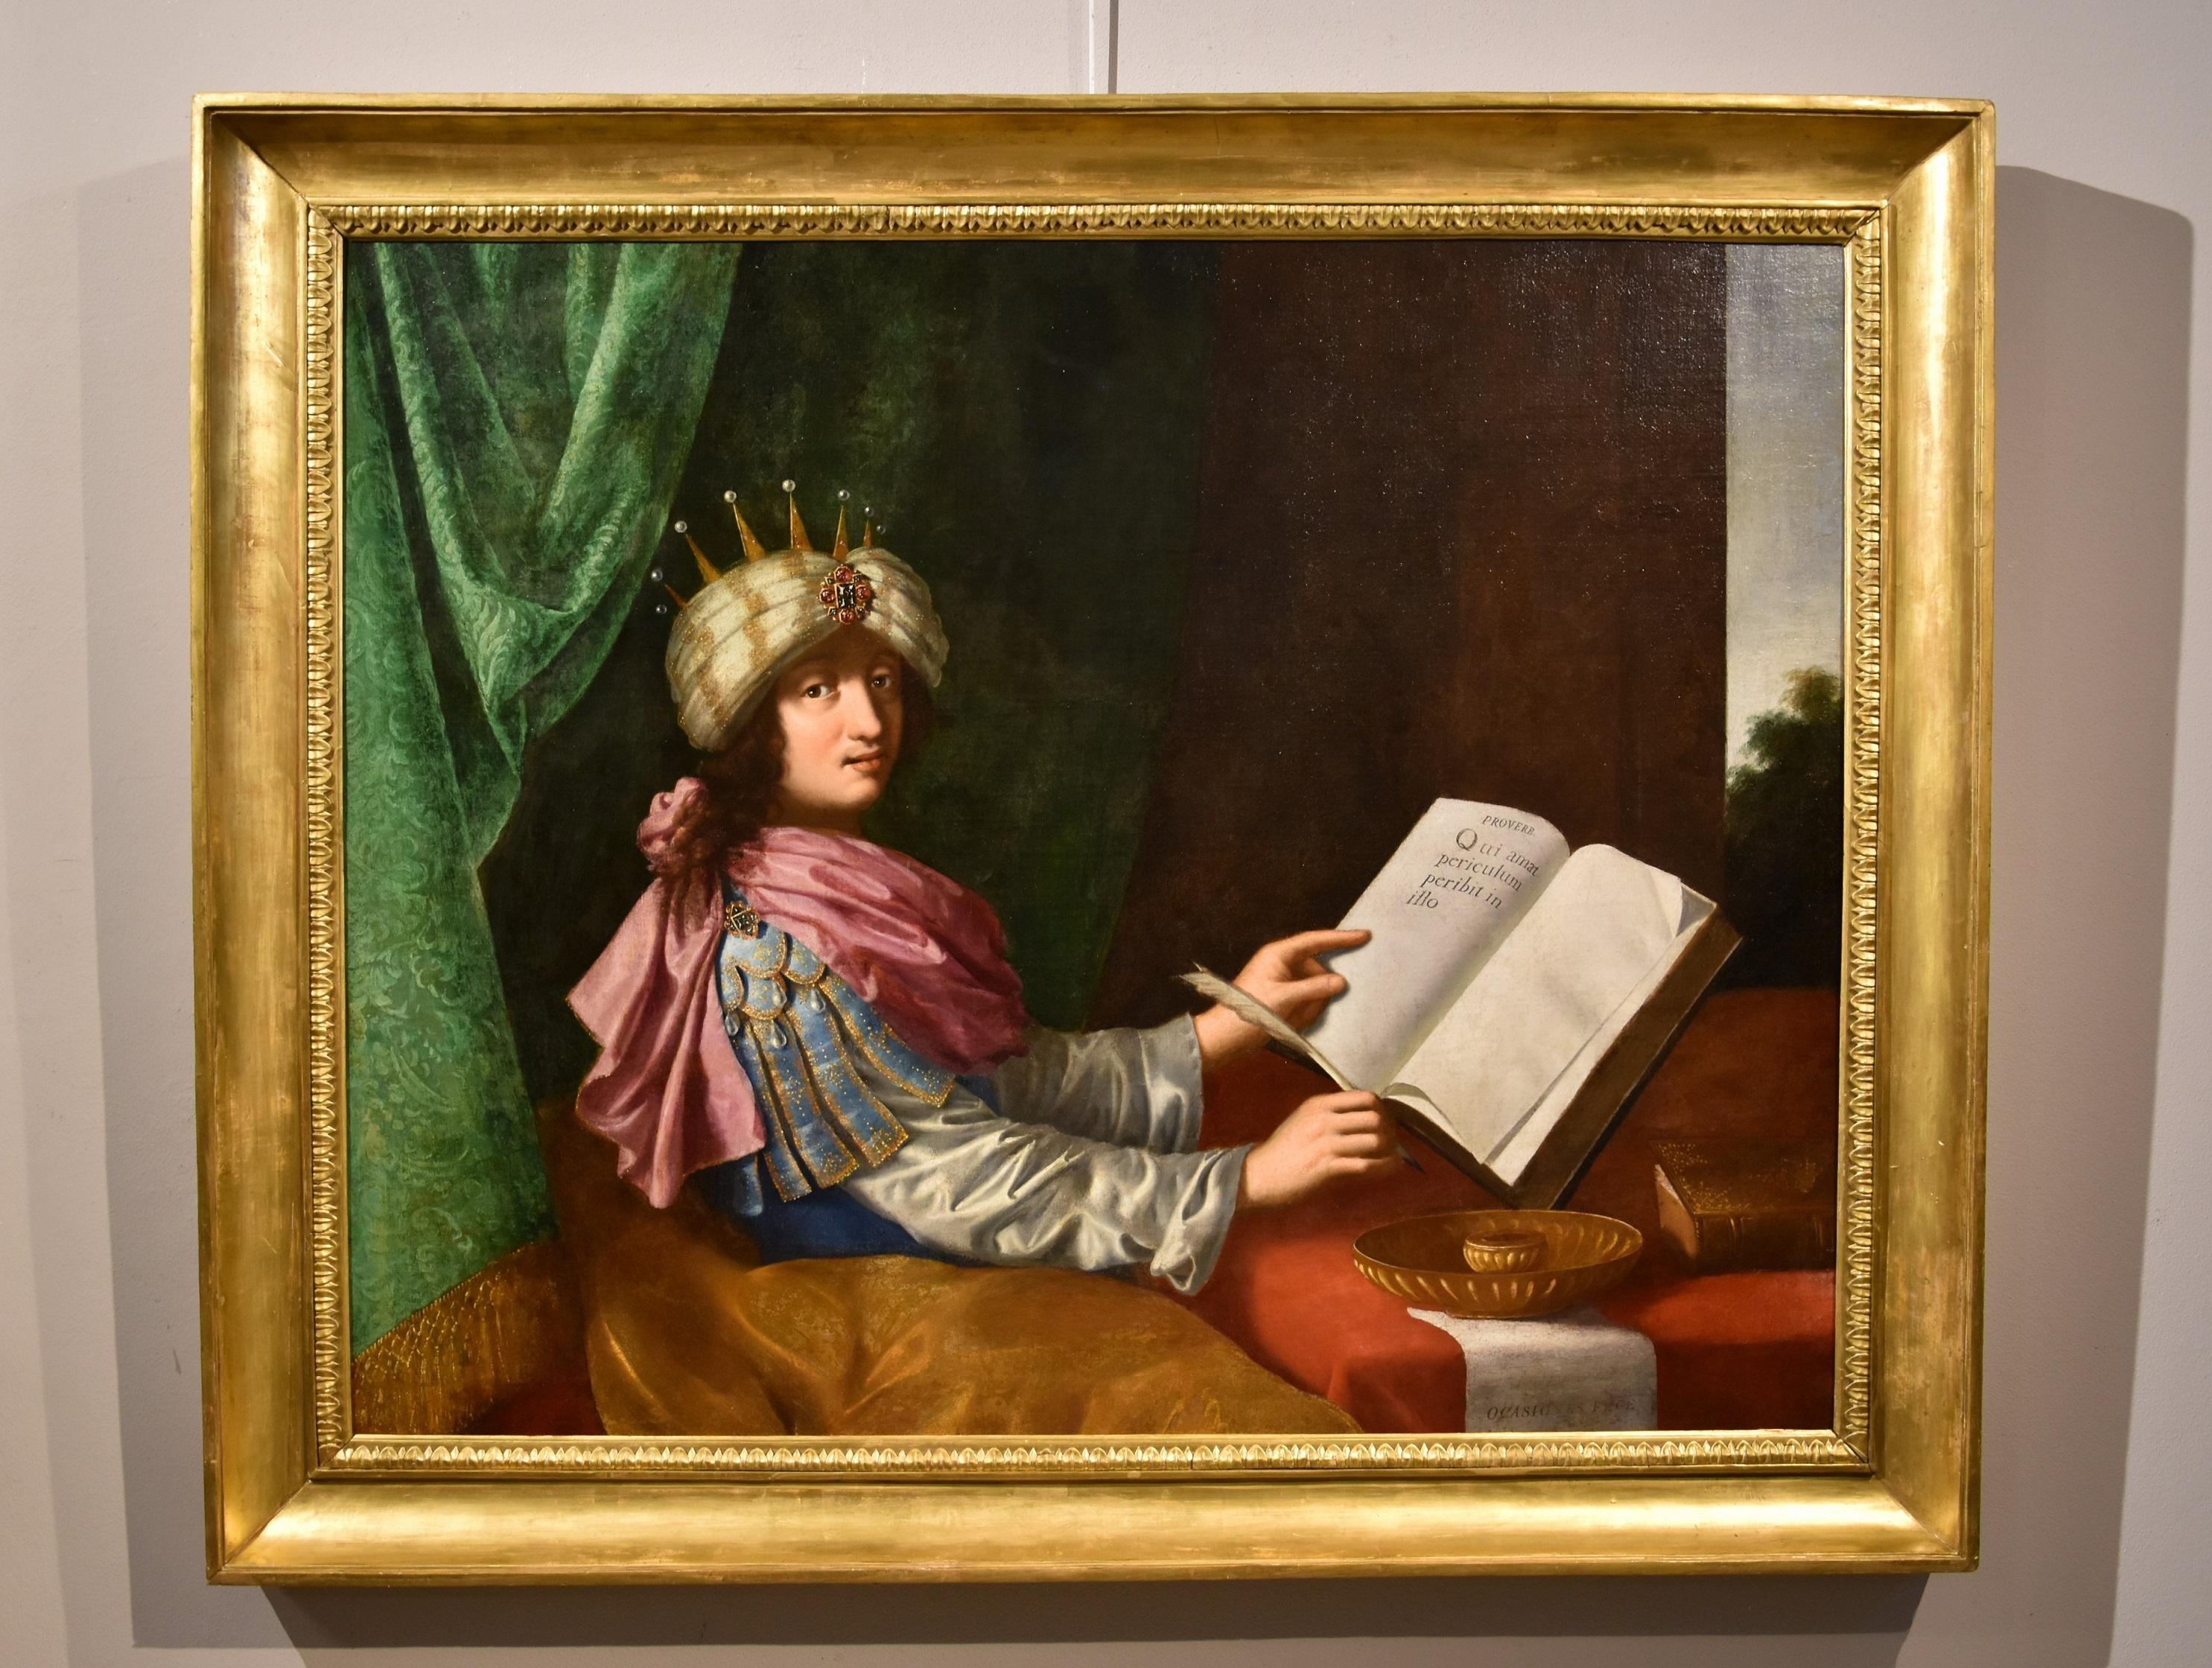 Portrait King Solomon Desubleo Paint Oil on canvas Old master 17th Century Art - Painting by Michele Desubleo (Maubeuge, 1602 - Parma, 1676)